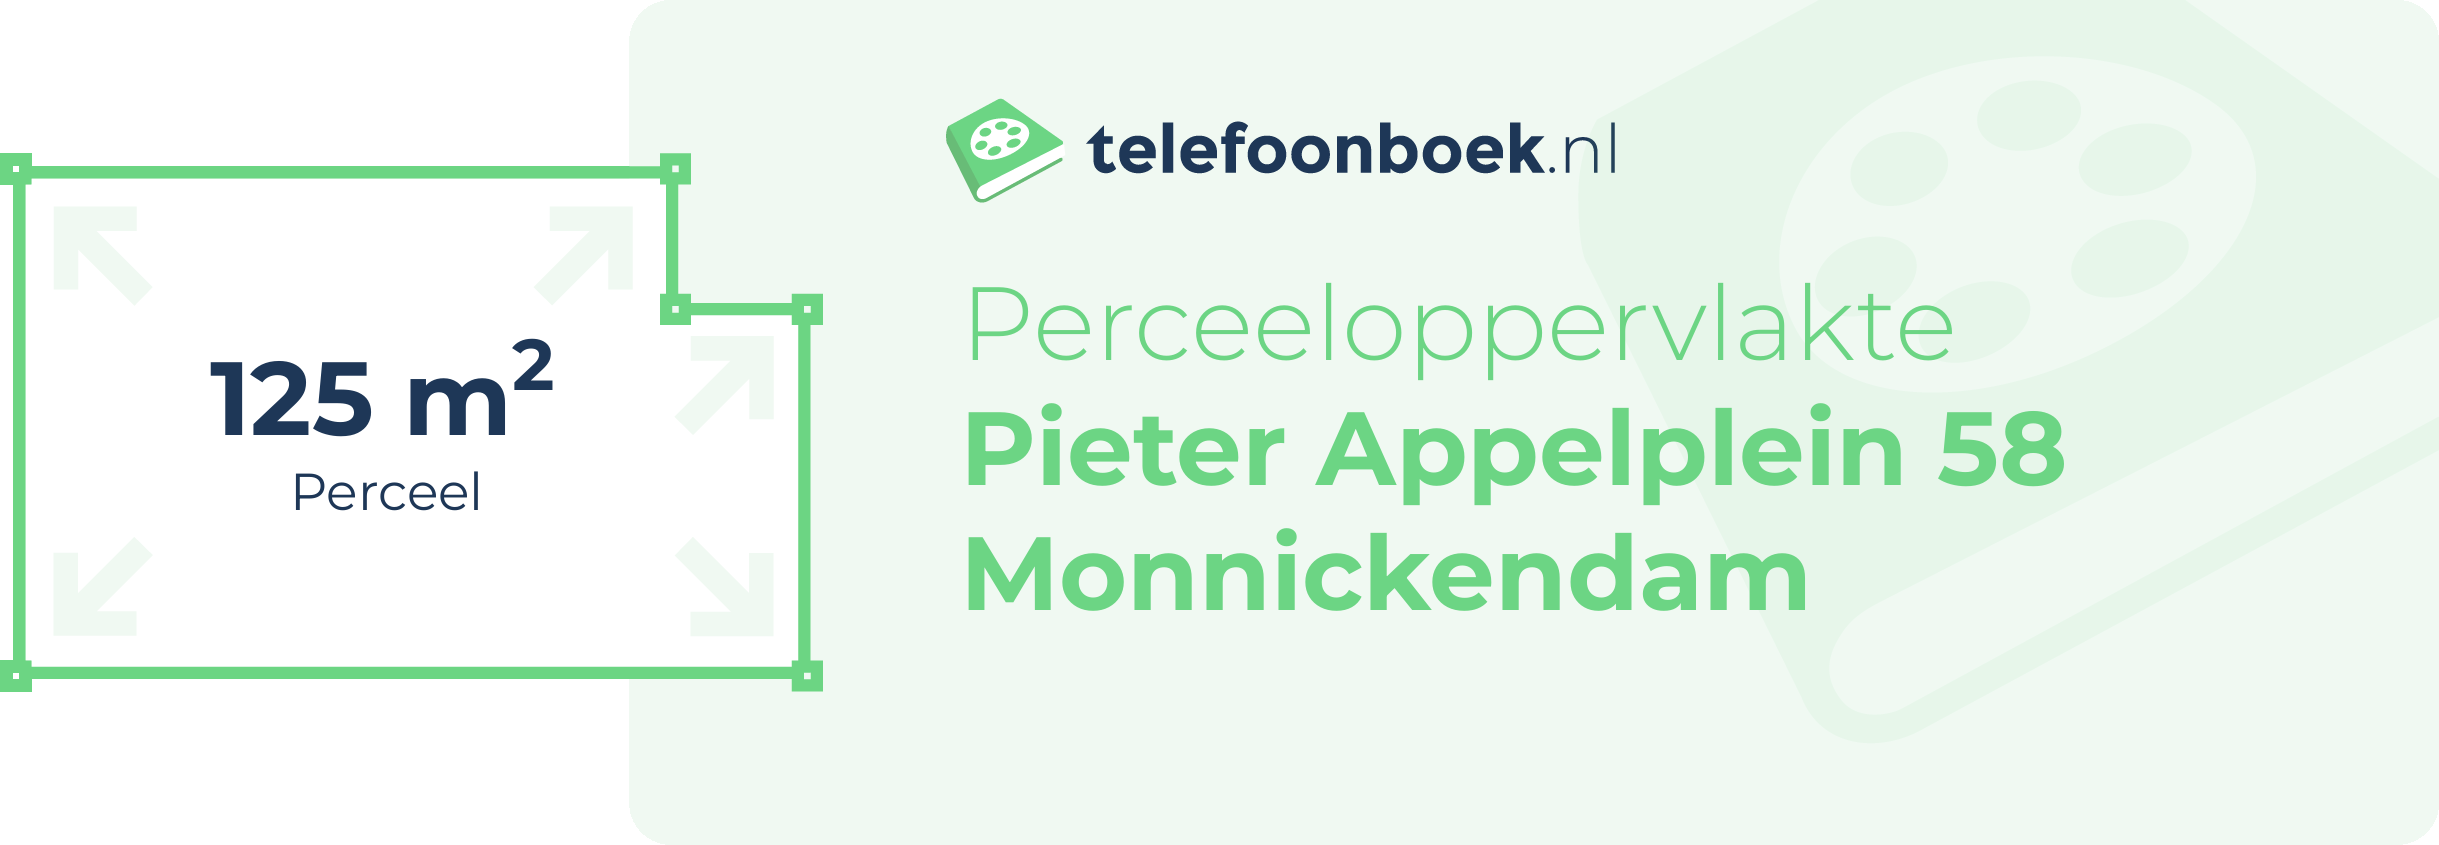 Perceeloppervlakte Pieter Appelplein 58 Monnickendam